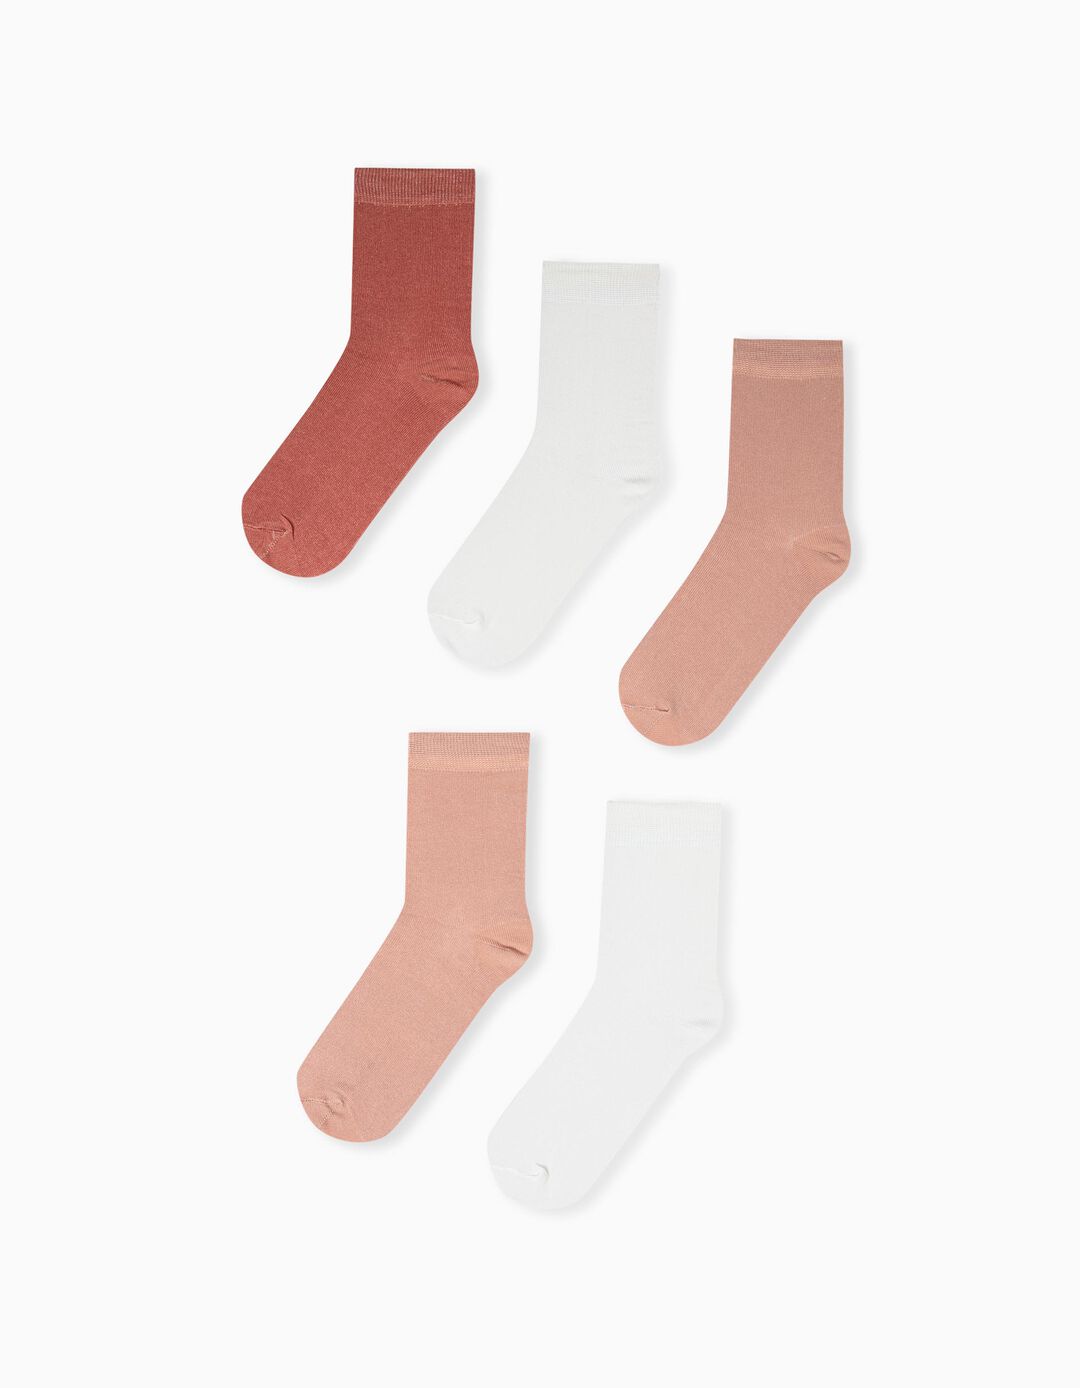 5 Pairs of Cotton Socks, White/ Pink